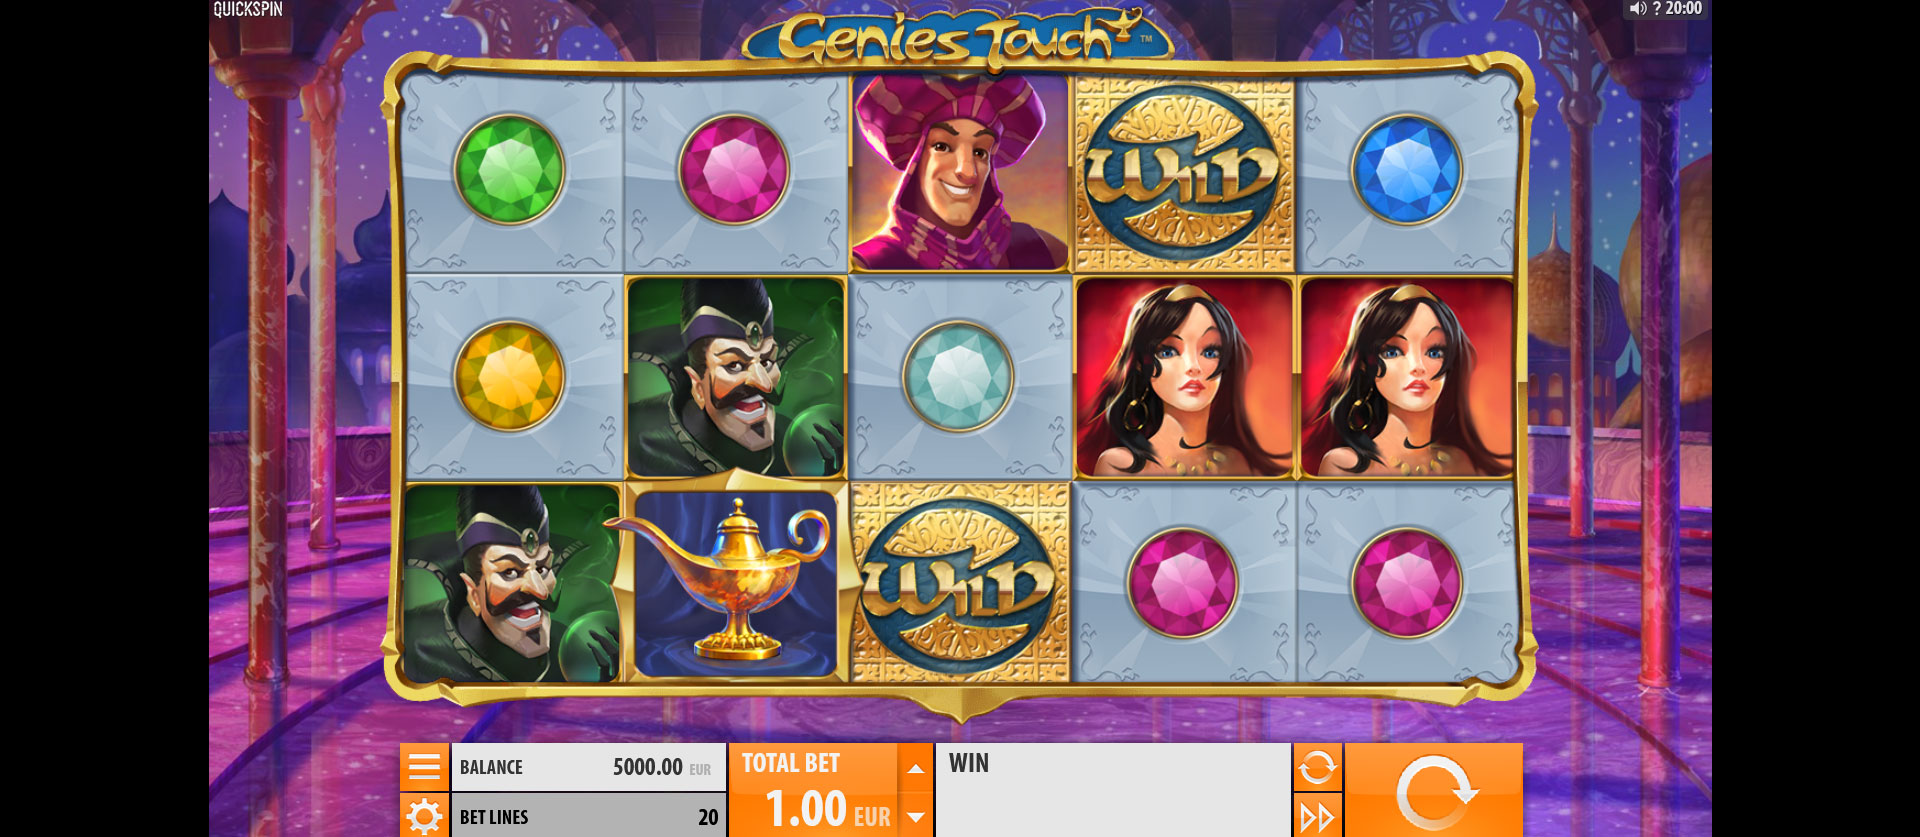 schermata del gioco slot online genies touch